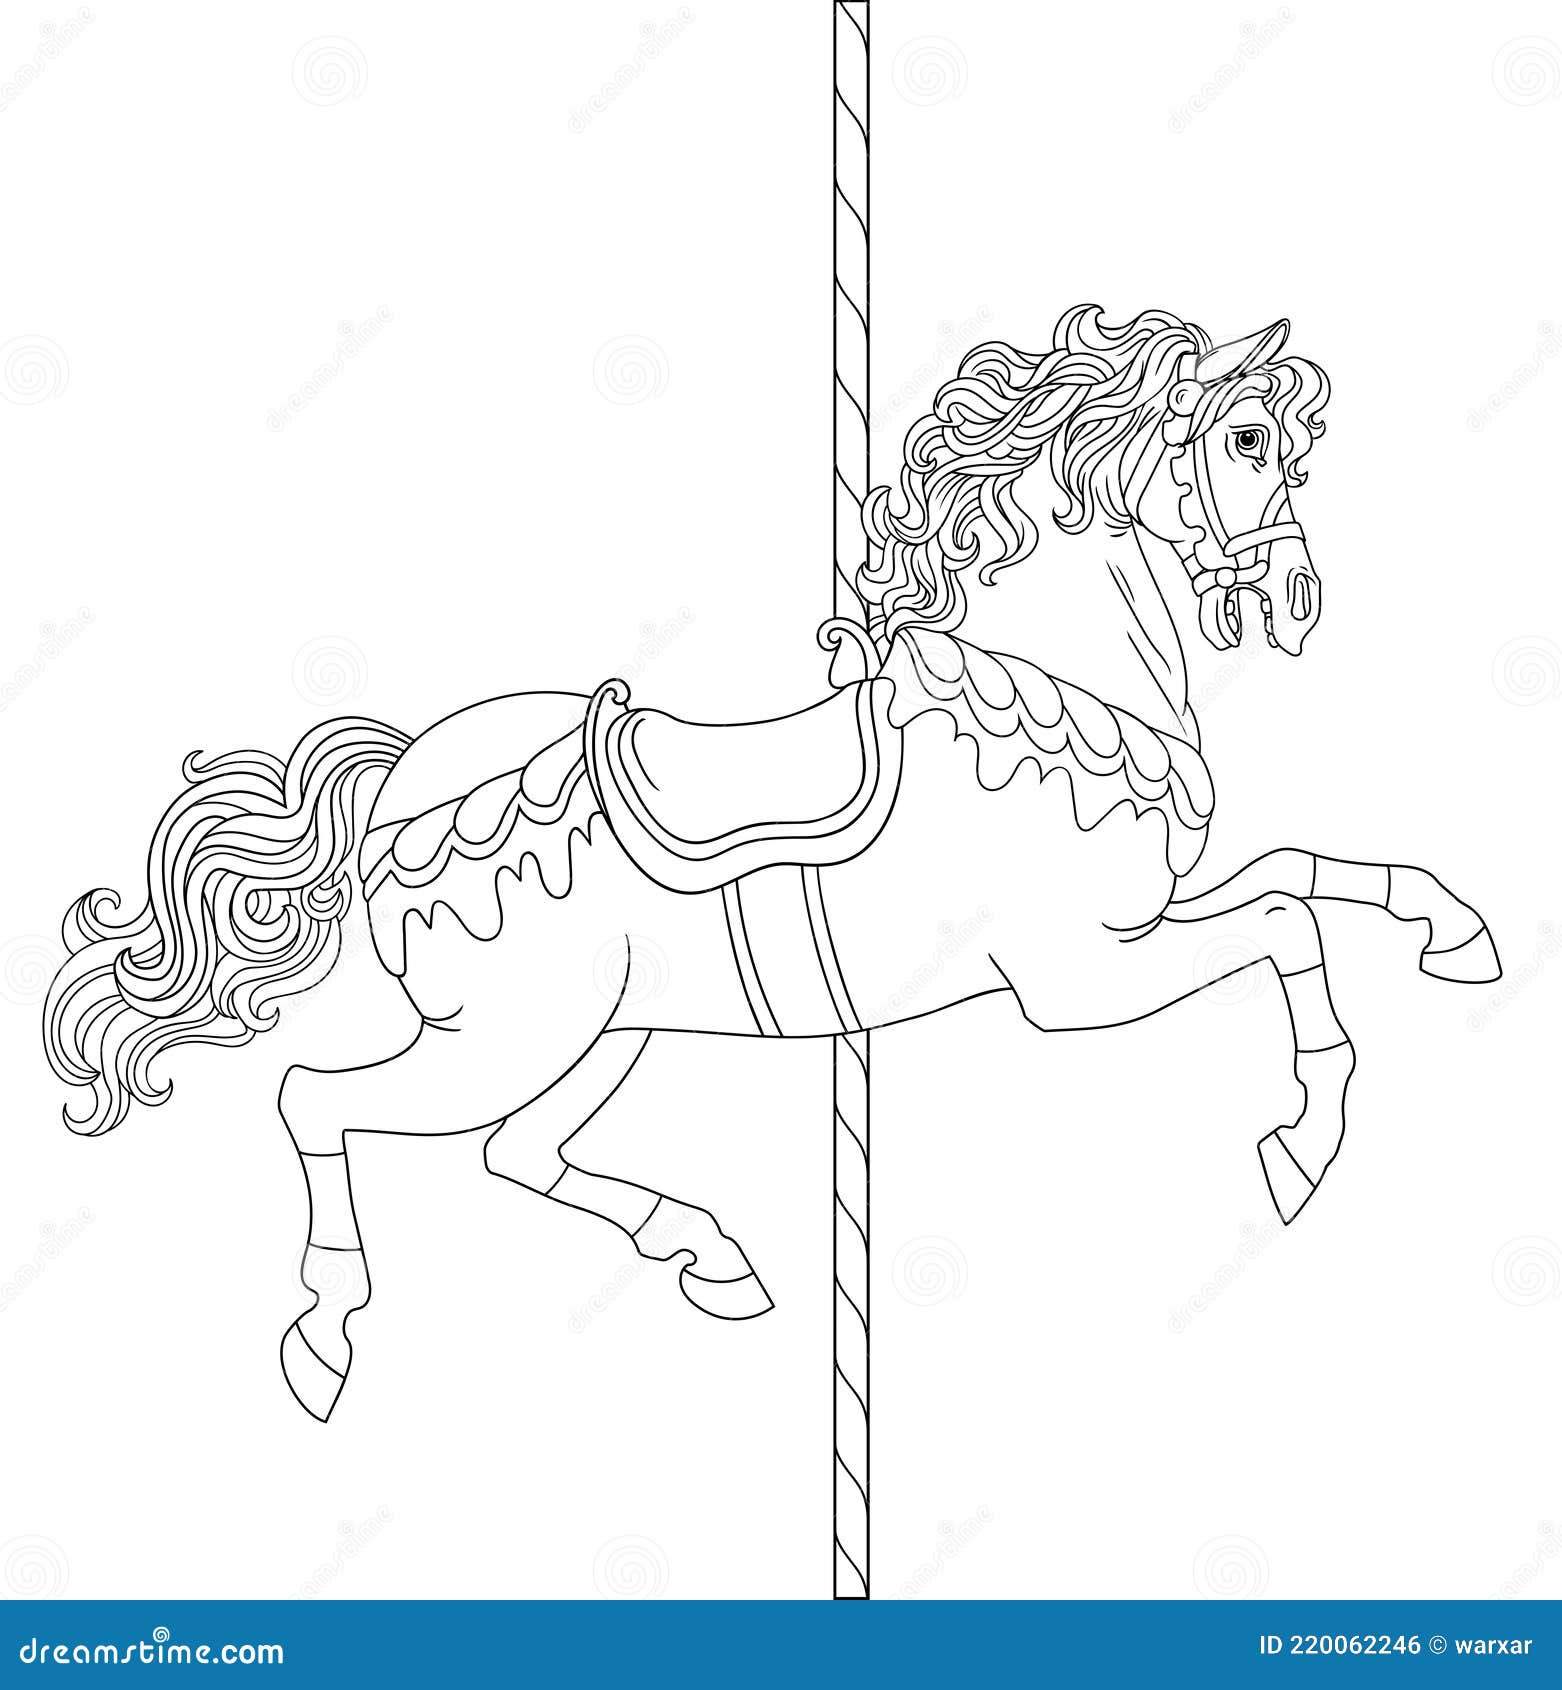 Desenho de Cavalo de carrossel para colorir